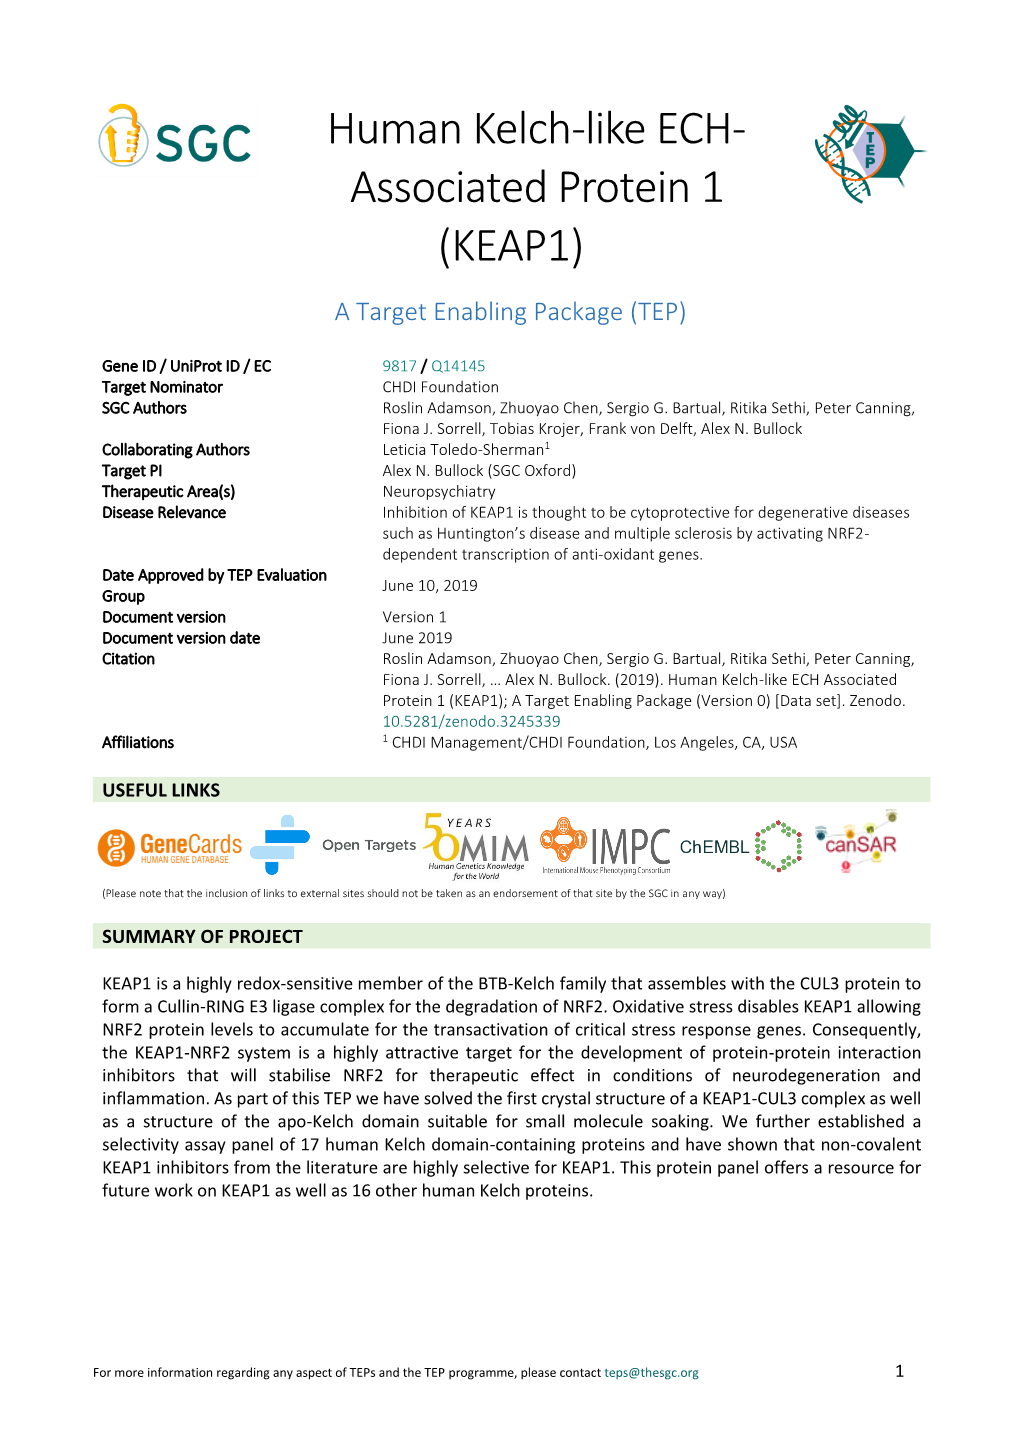 Human Kelch-Like ECH- Associated Protein 1 (KEAP1) a Target Enabling Package (TEP)